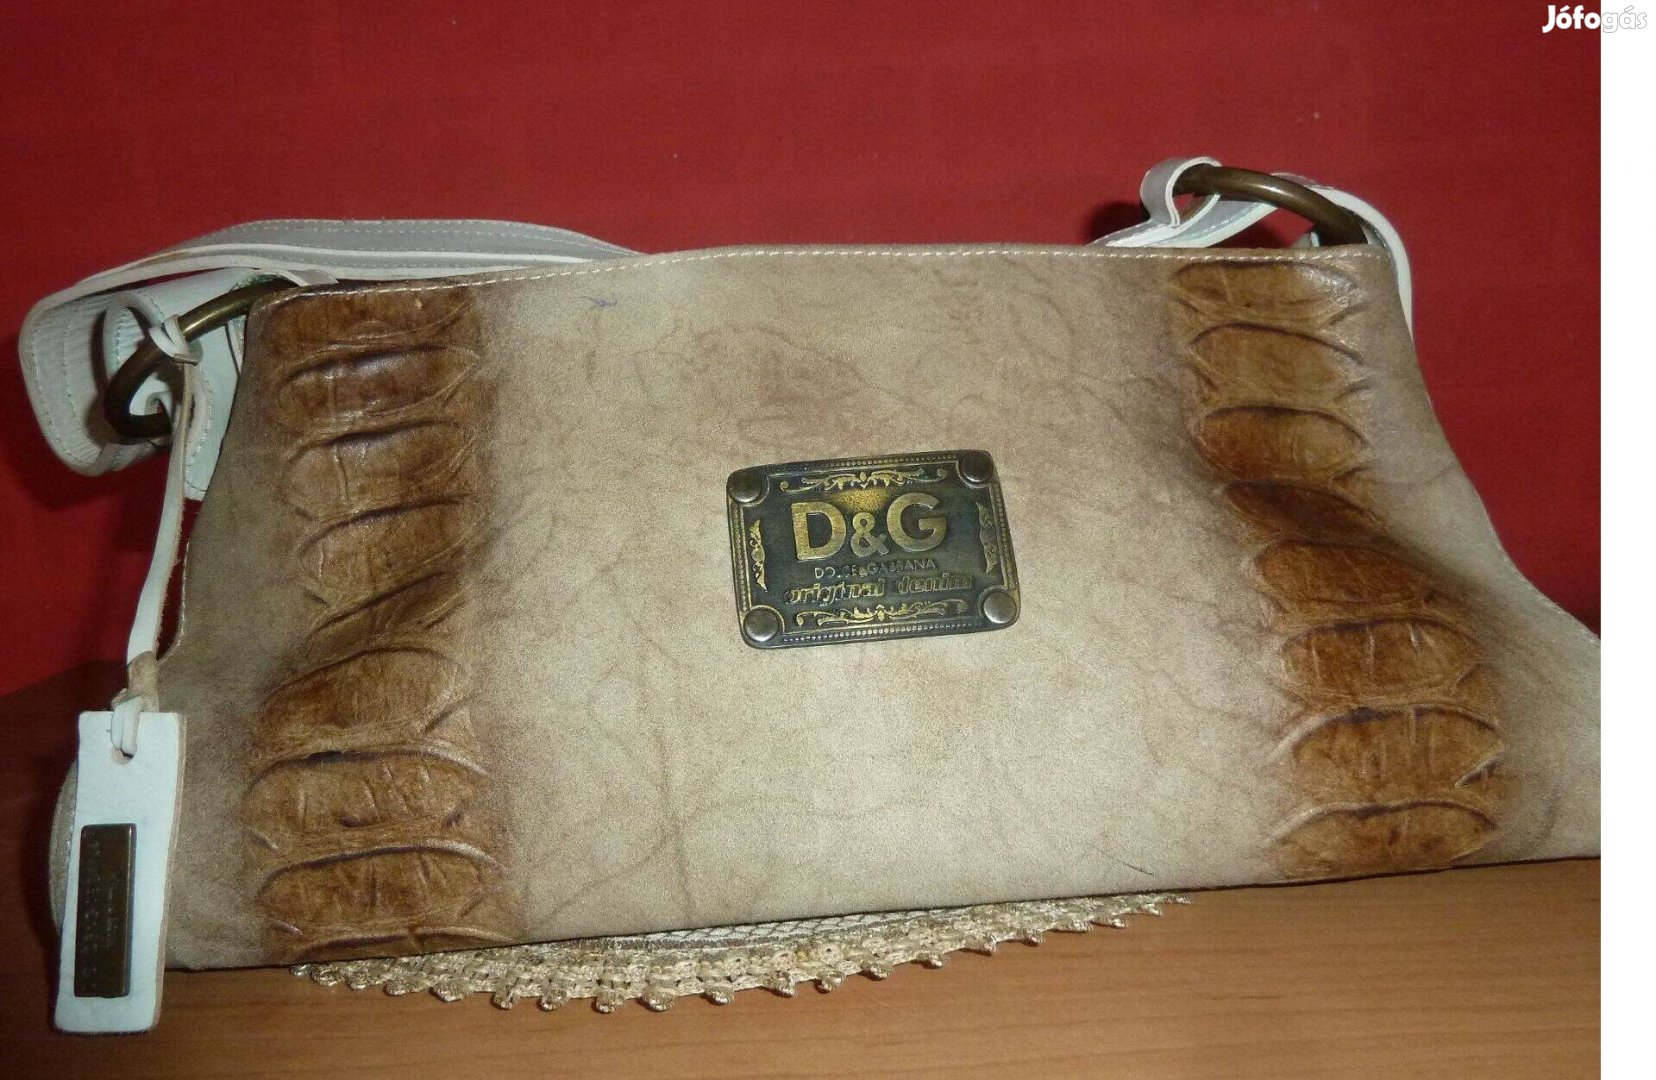 "D&G" Dolce&Gabbana Valódi bőr női táska 33x16x14cm